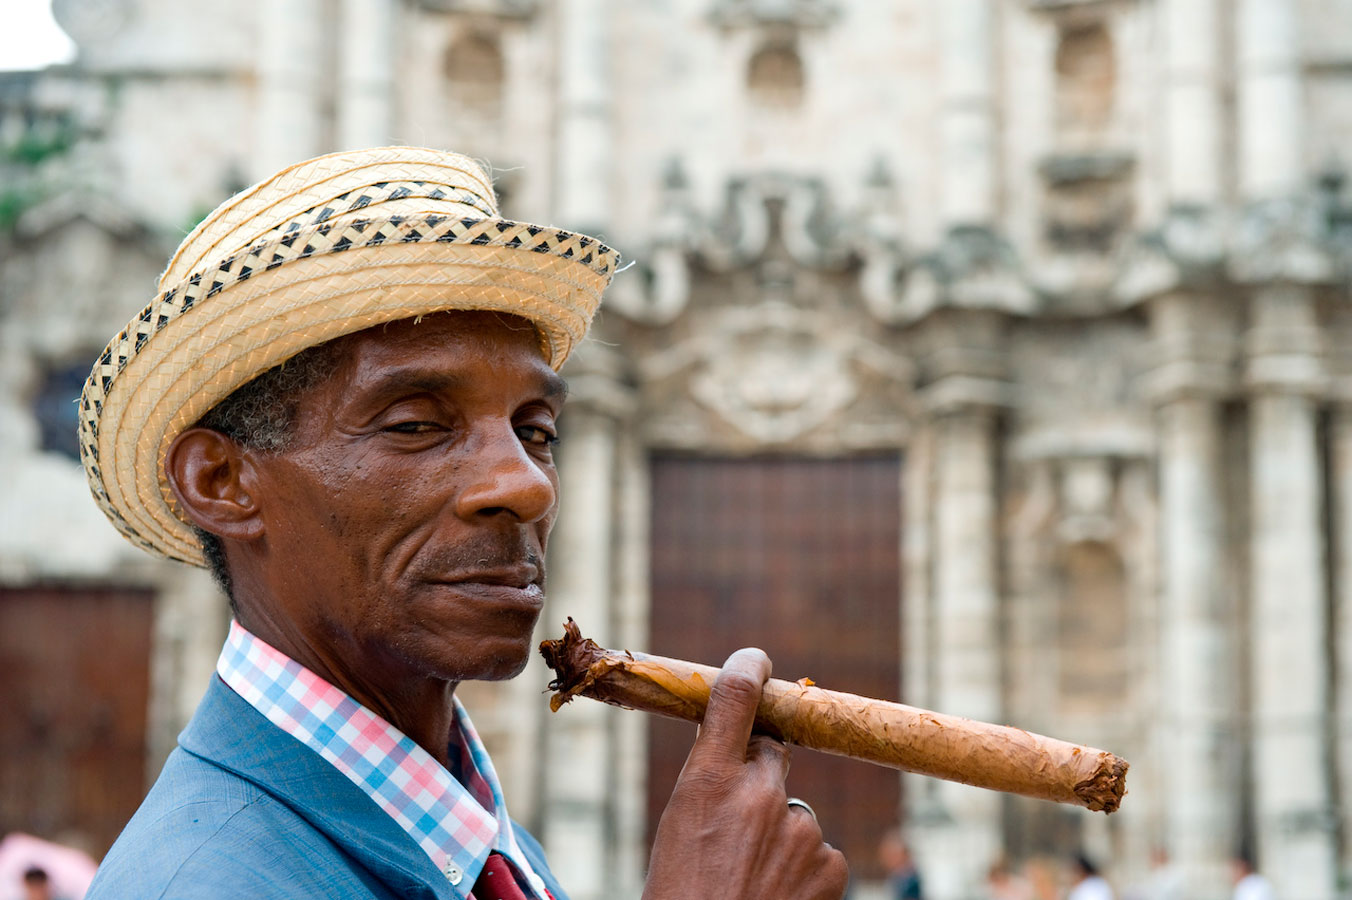 Кубинские мужчины. Куба Гавана Ром сигары кубинцы. Кубинские сигары Гавана. Кубинская сигара Cohiba Habana Cuba. Кубинский табакеро Луис.